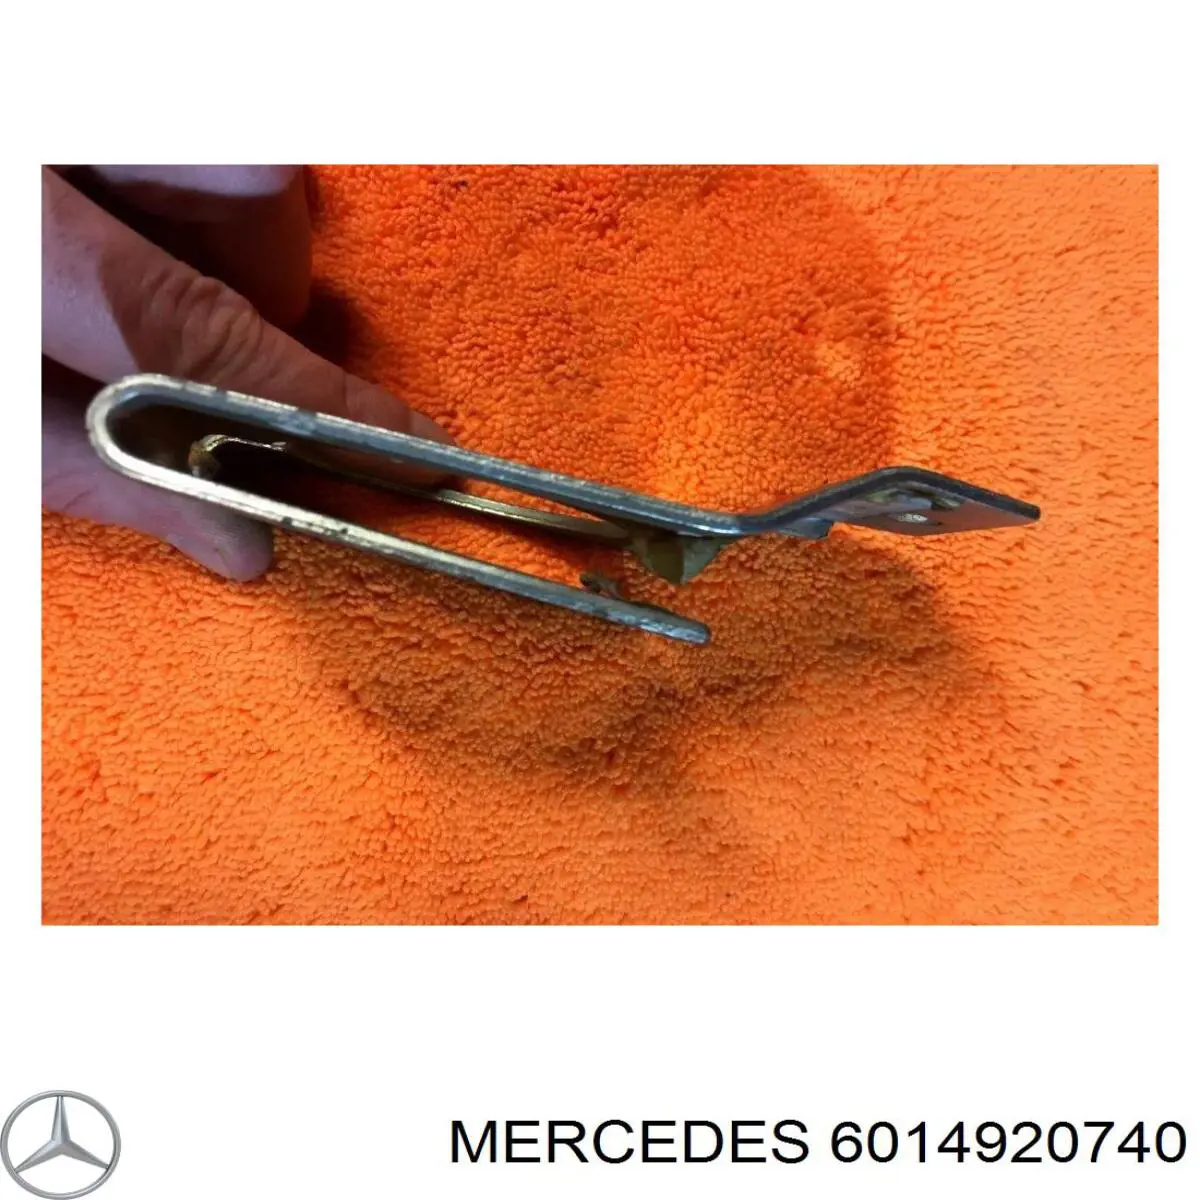 6014920740 Mercedes abrazadera de sujeción delantera